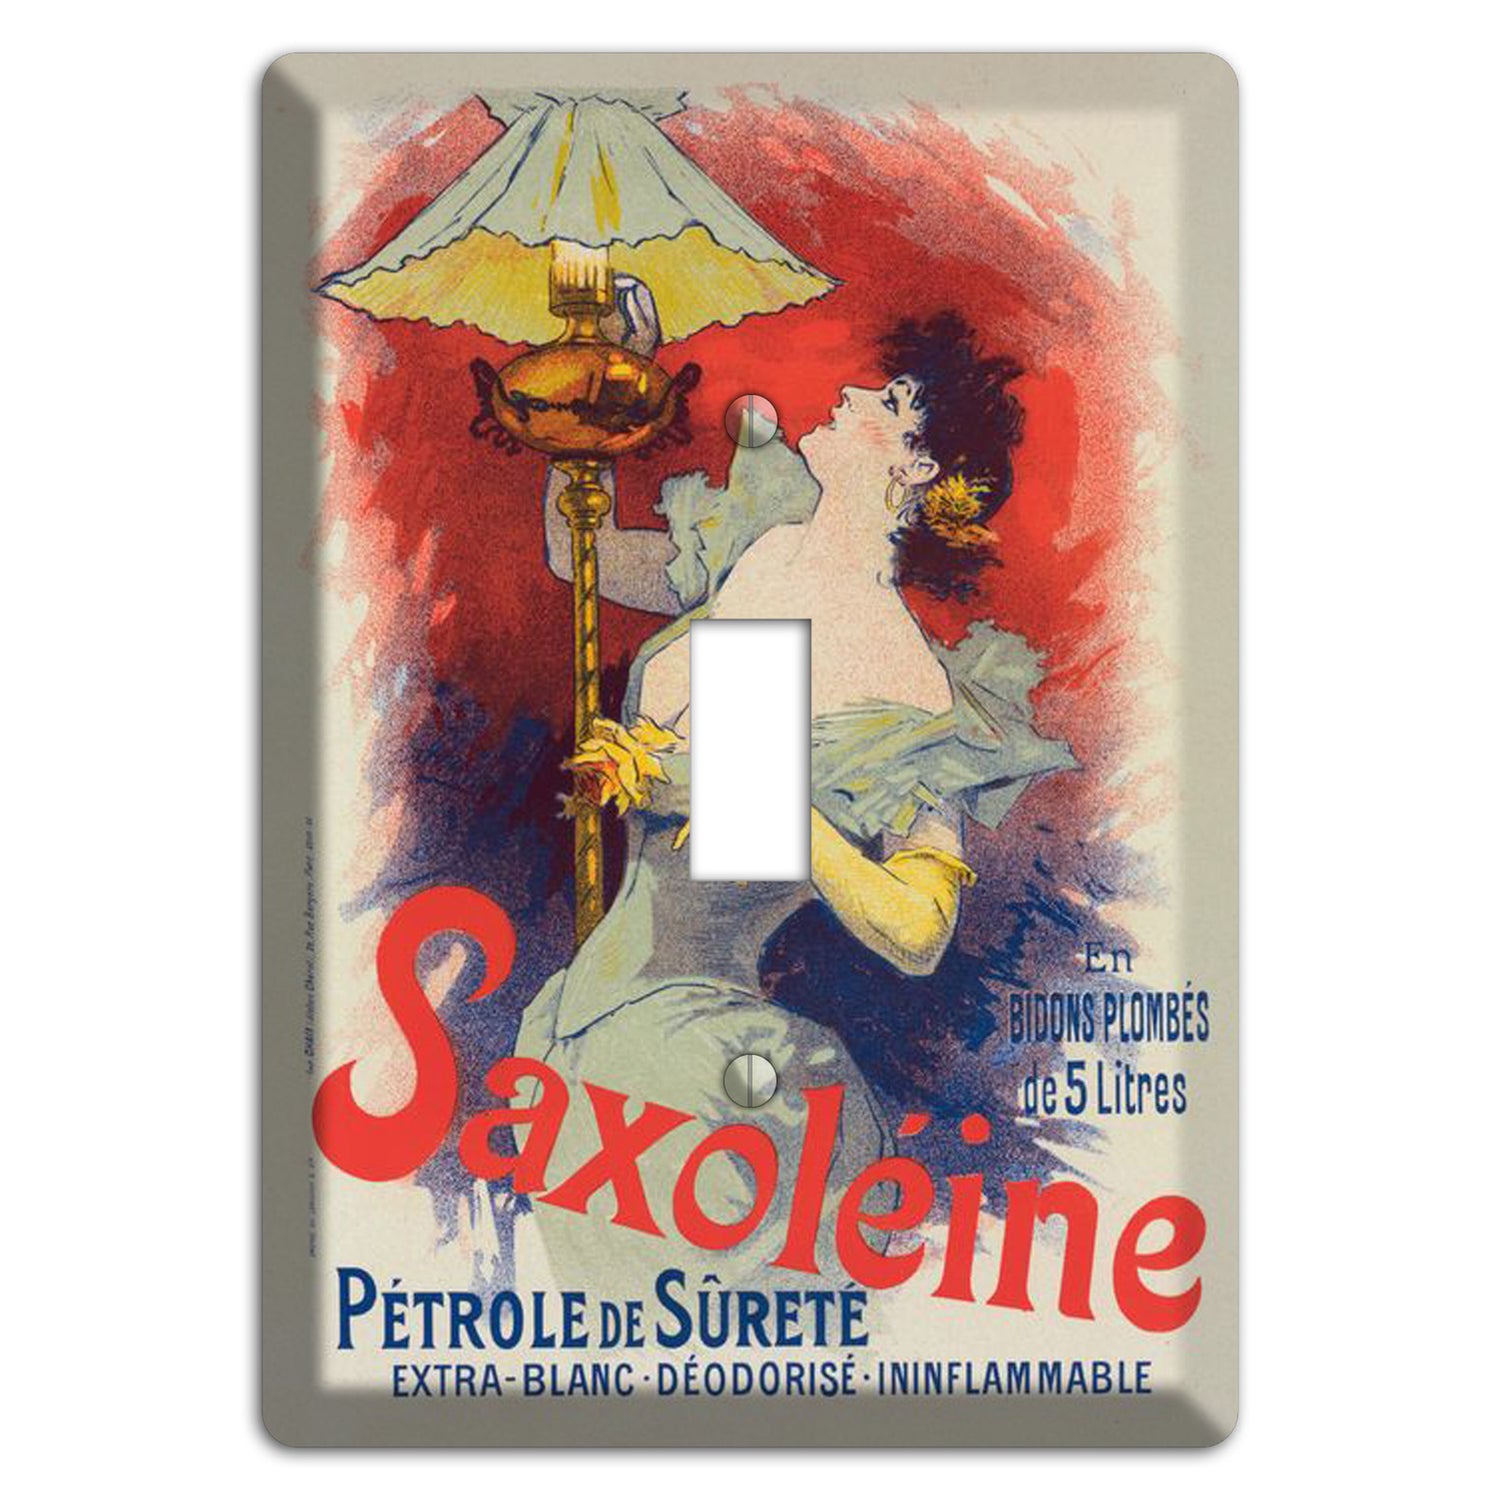 Saxoleine Vintage Poster Cover Plates